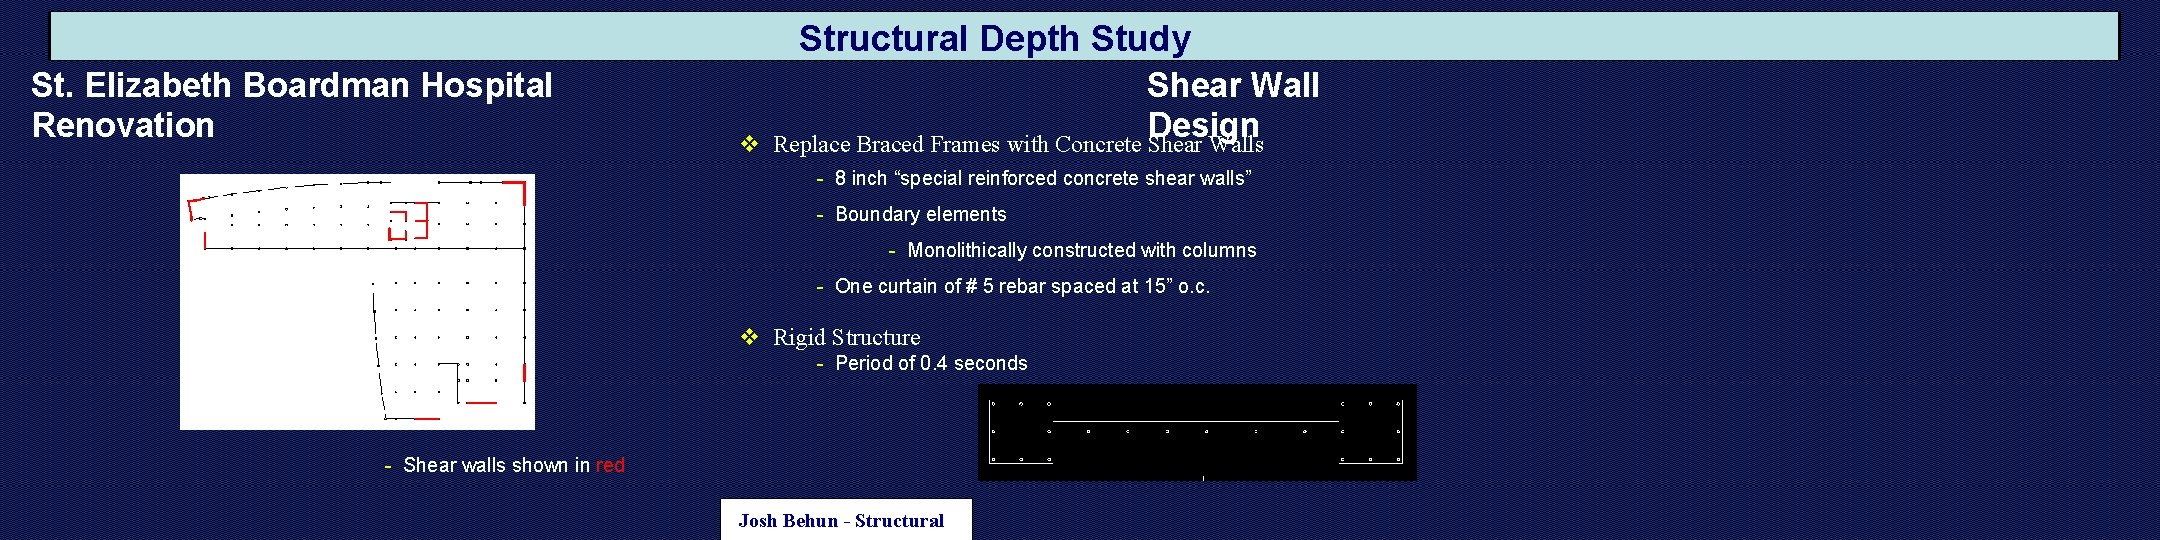 Structural Depth Study St. Elizabeth Boardman Hospital Renovation v Shear Wall Design Replace Braced